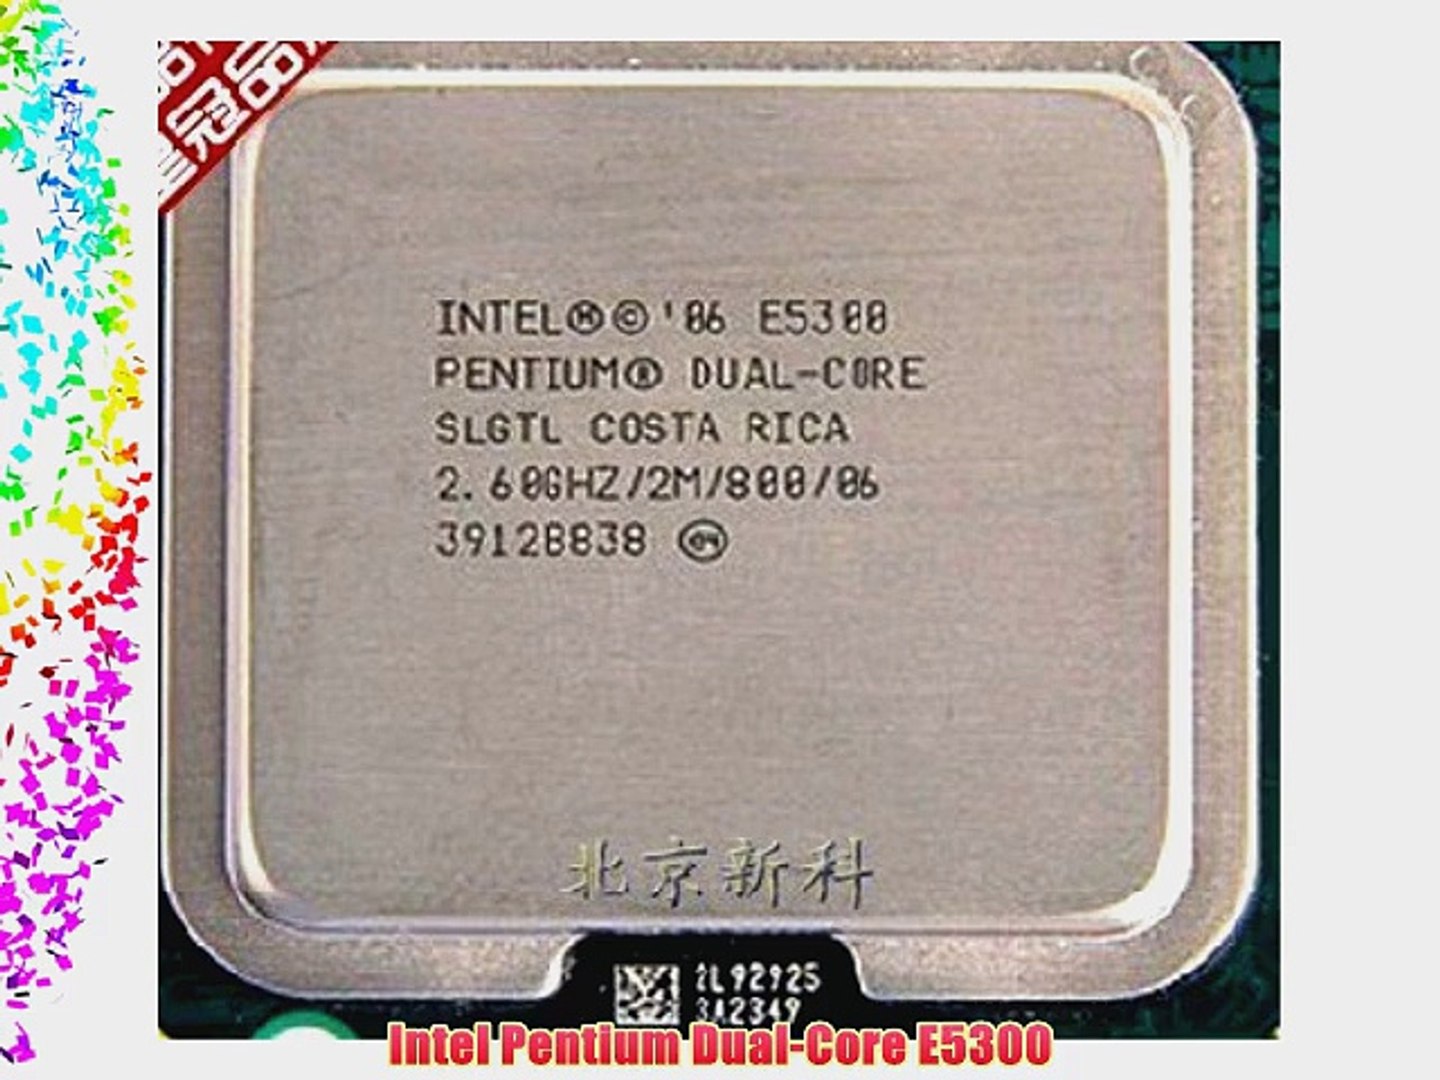 Intel Pentium Dual-Core E5300 2600MHz 800MHz 2MB SLGTL CPU - video  Dailymotion